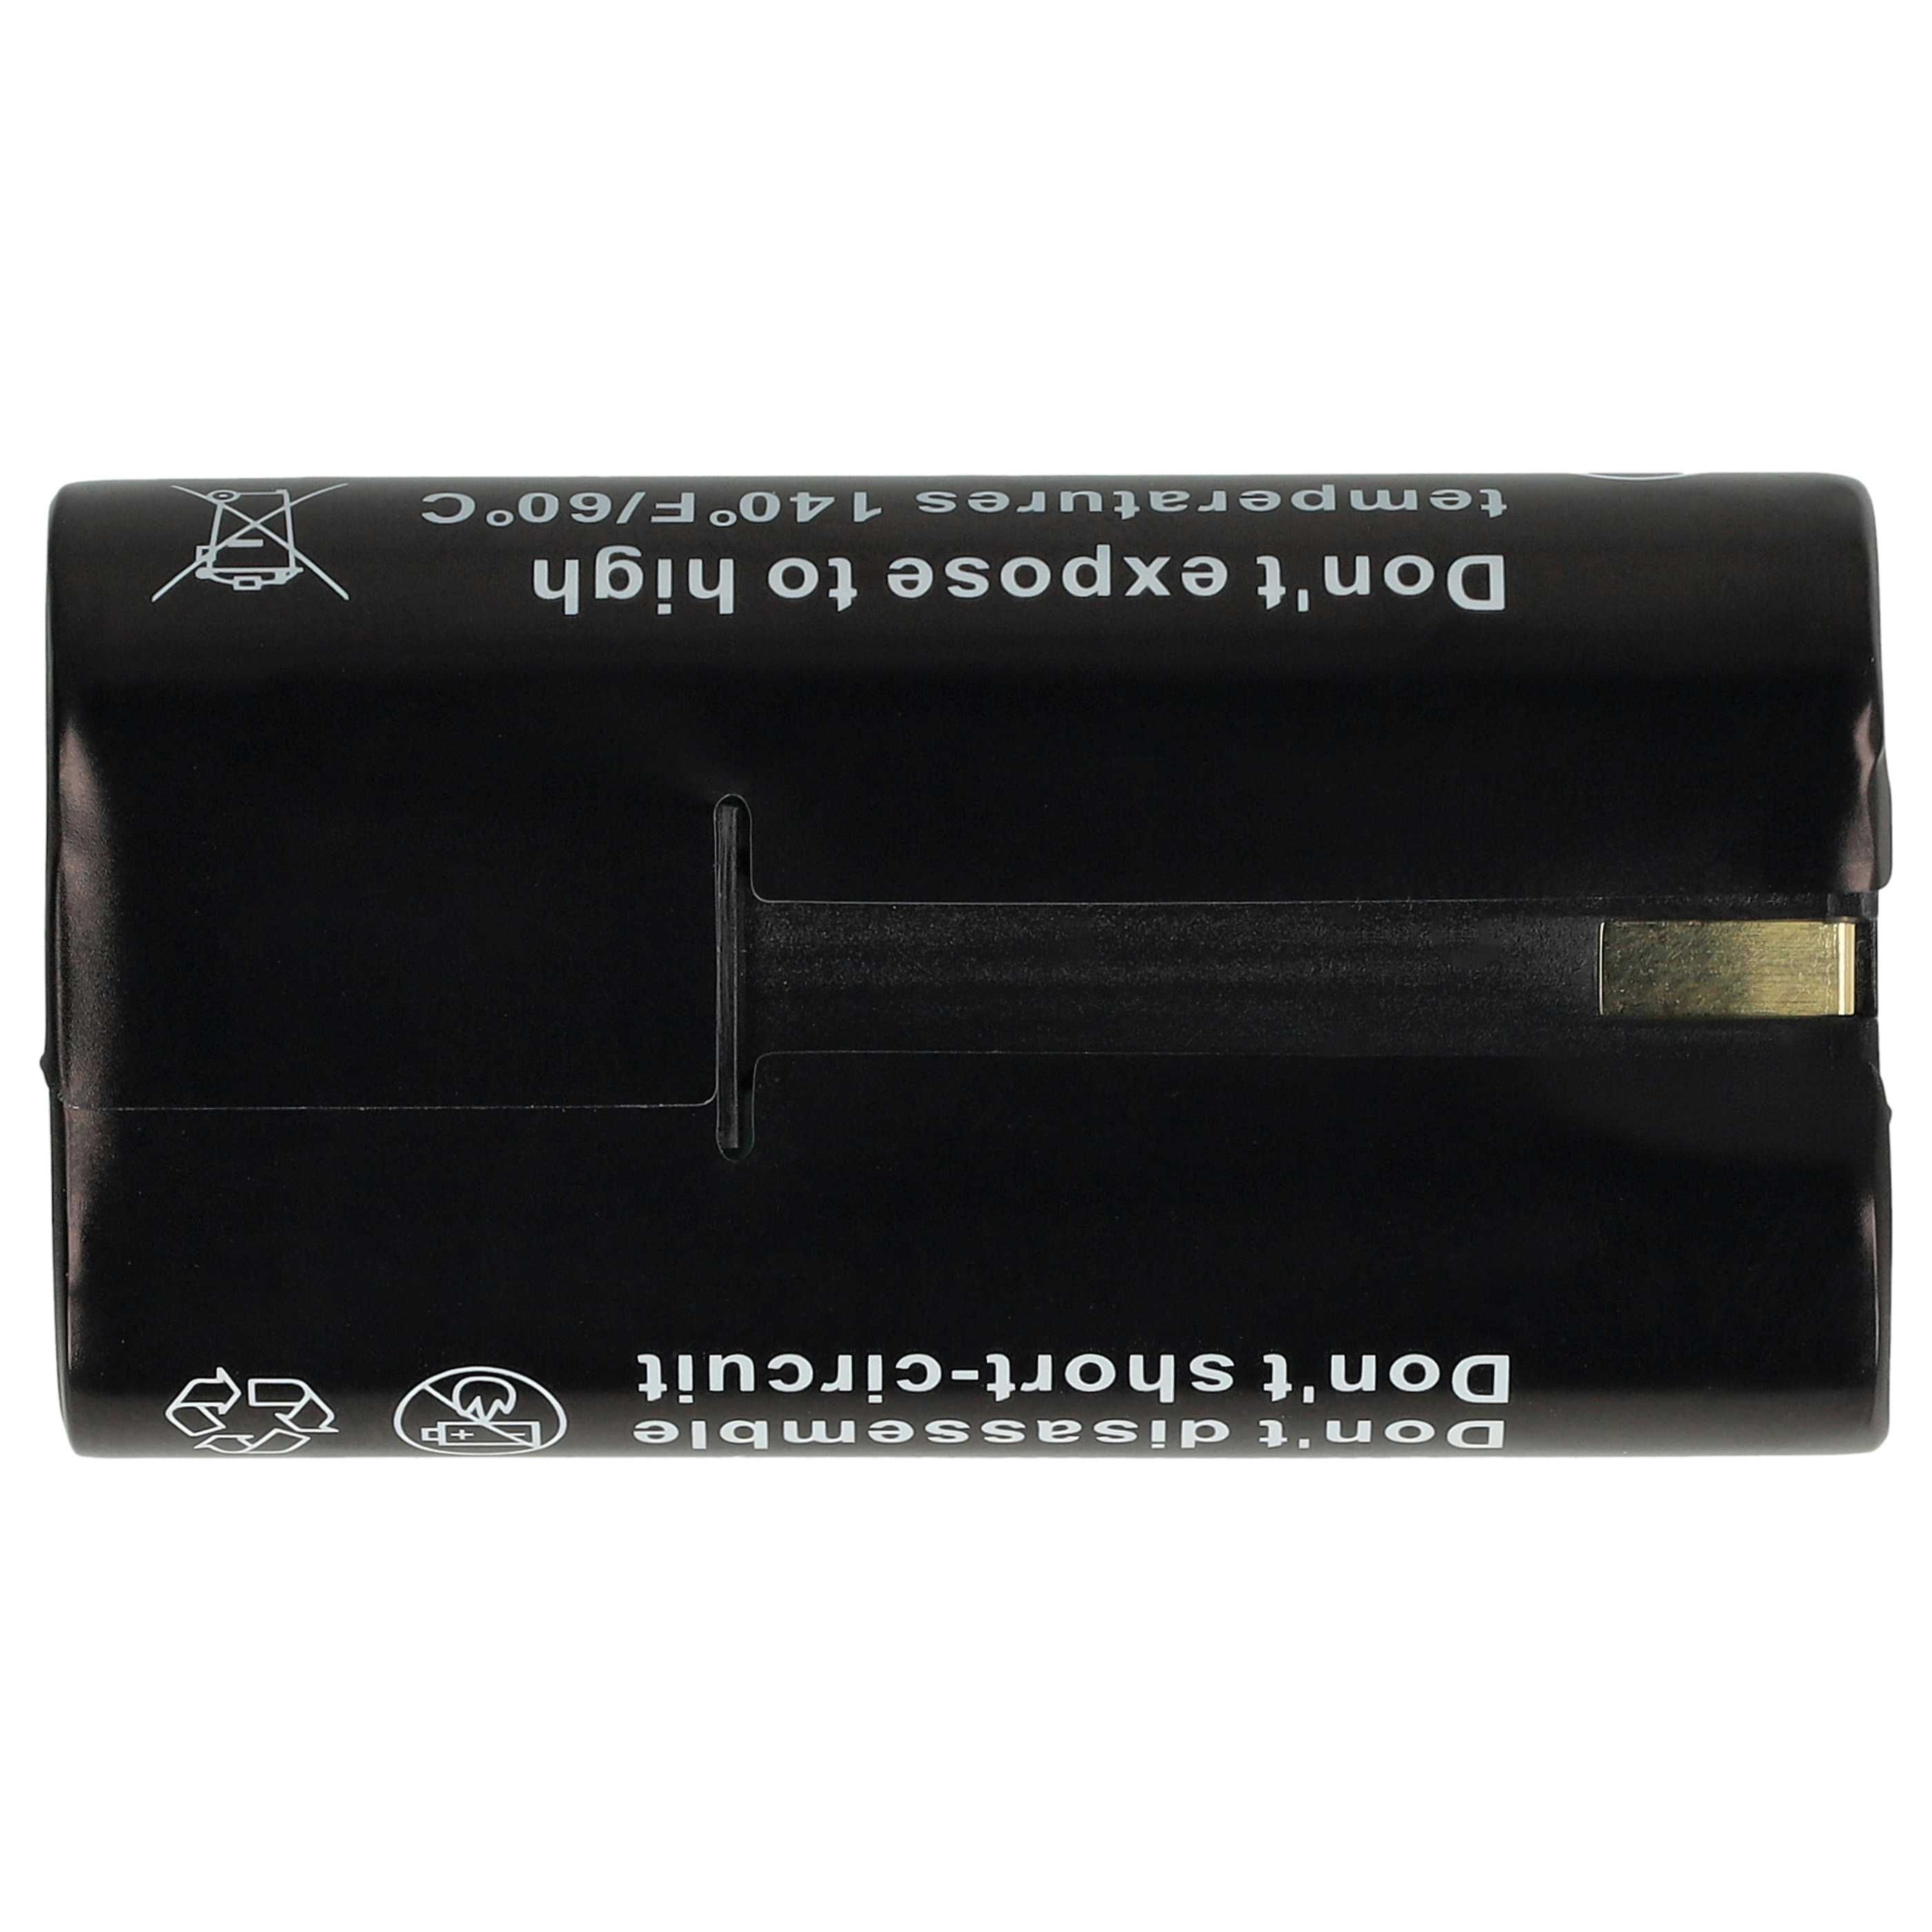 Akumulator do aparatu cyfrowego zamiennik Kodak Klic-8000, RB50 - 1520 mAh 3,6 V Li-Ion